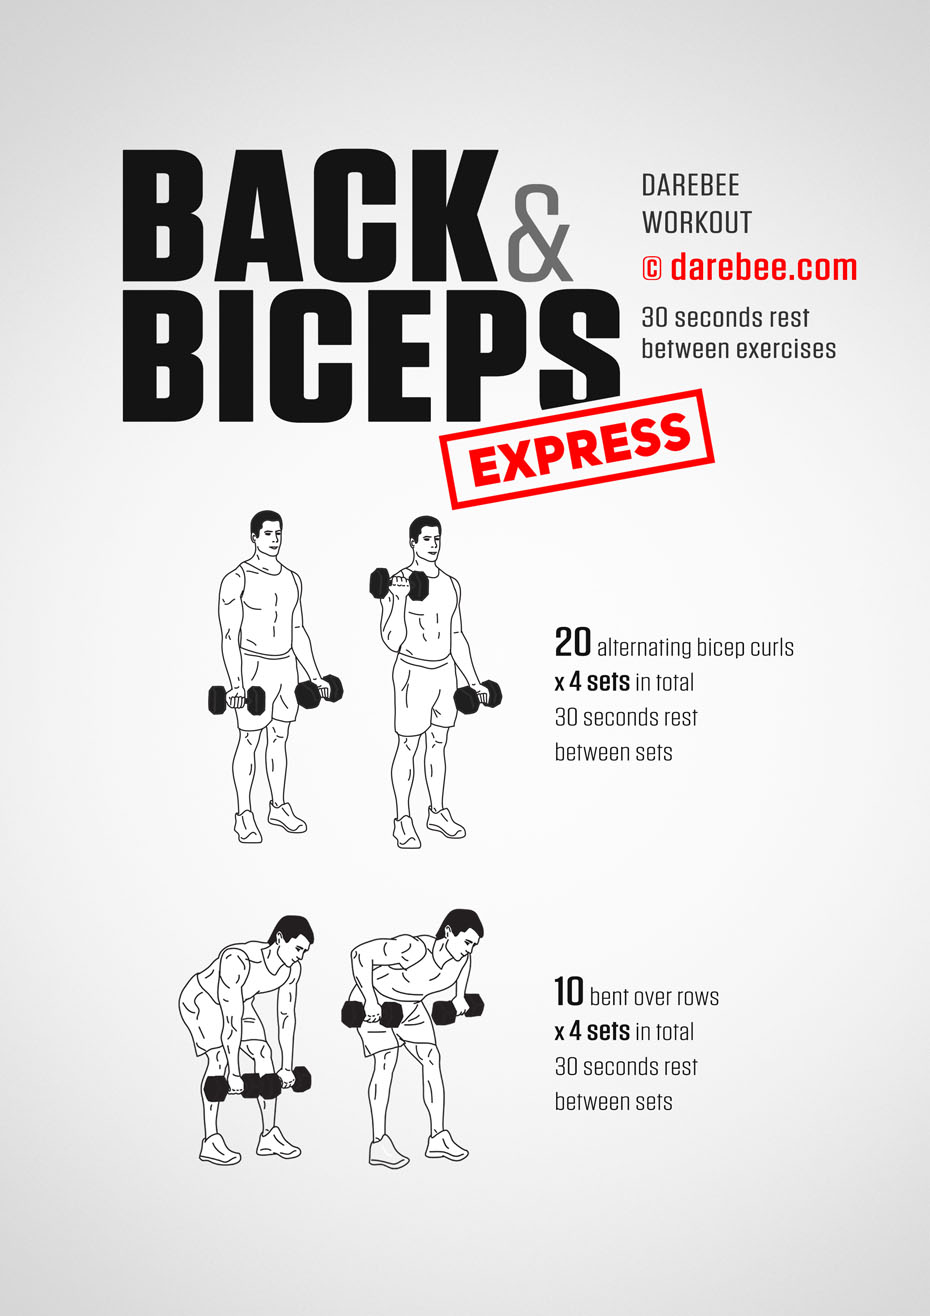 Back & Biceps Express Workout